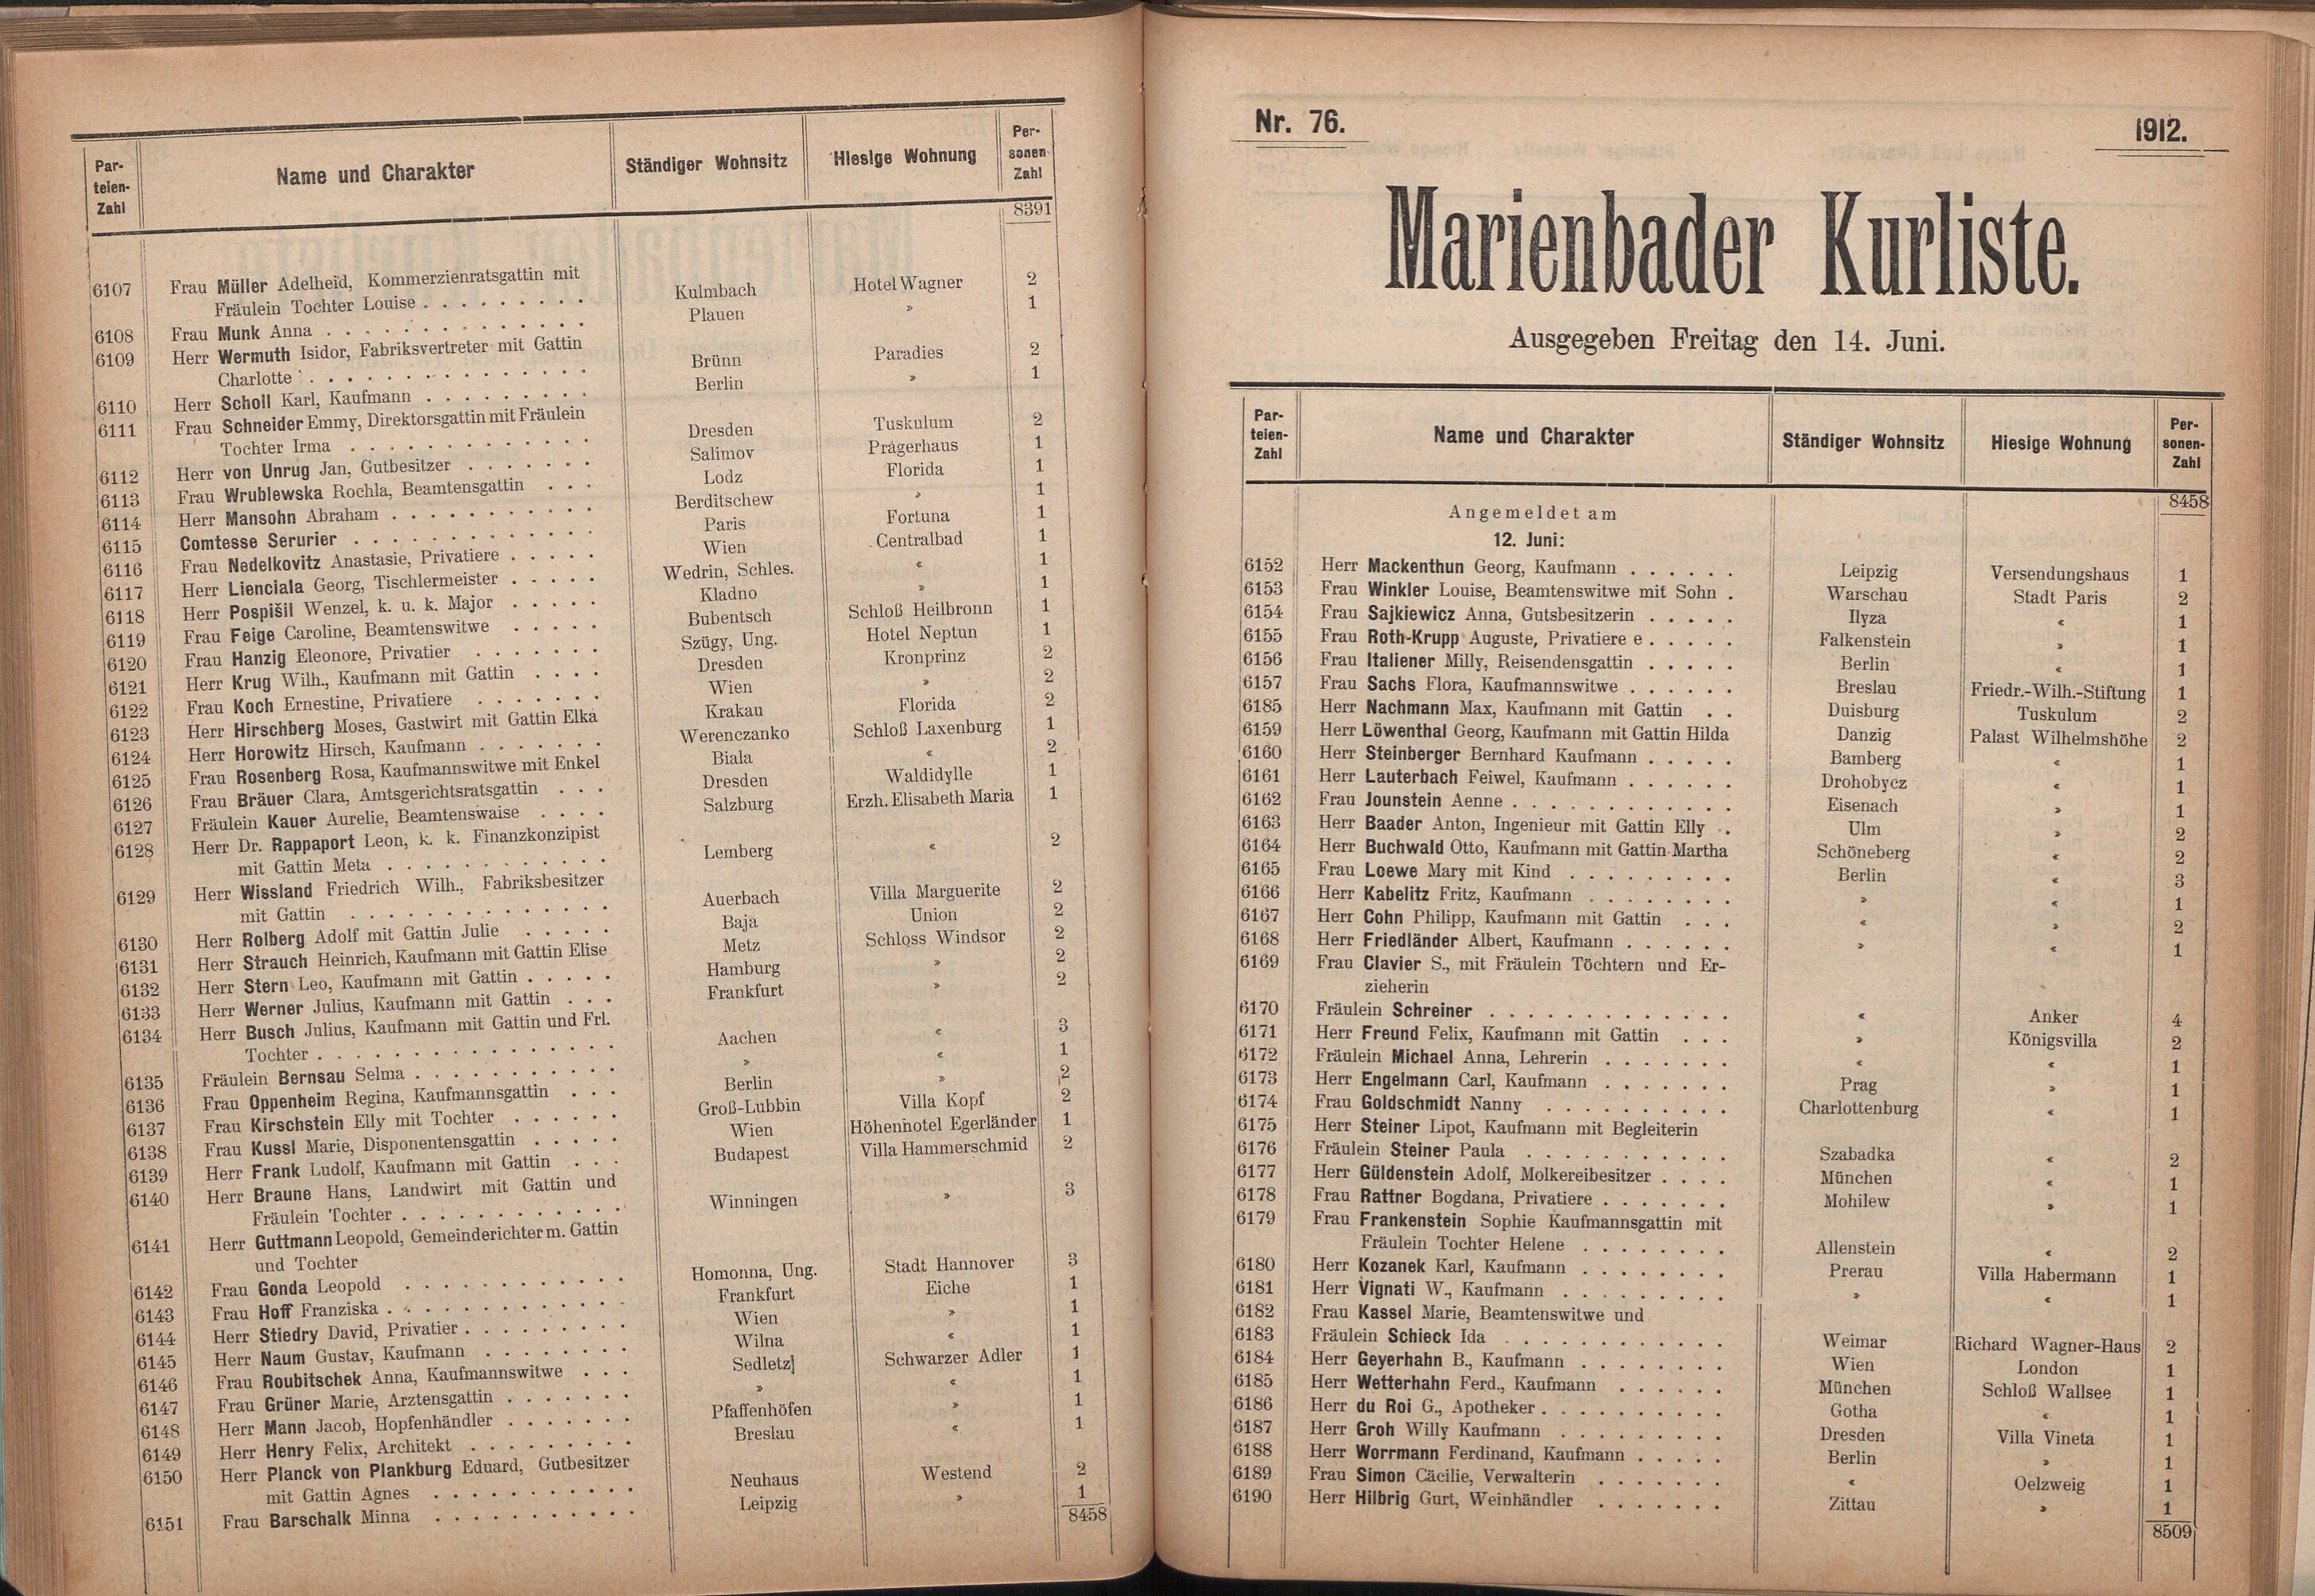 93. soap-ch_knihovna_marienbader-kurliste-1912_0930